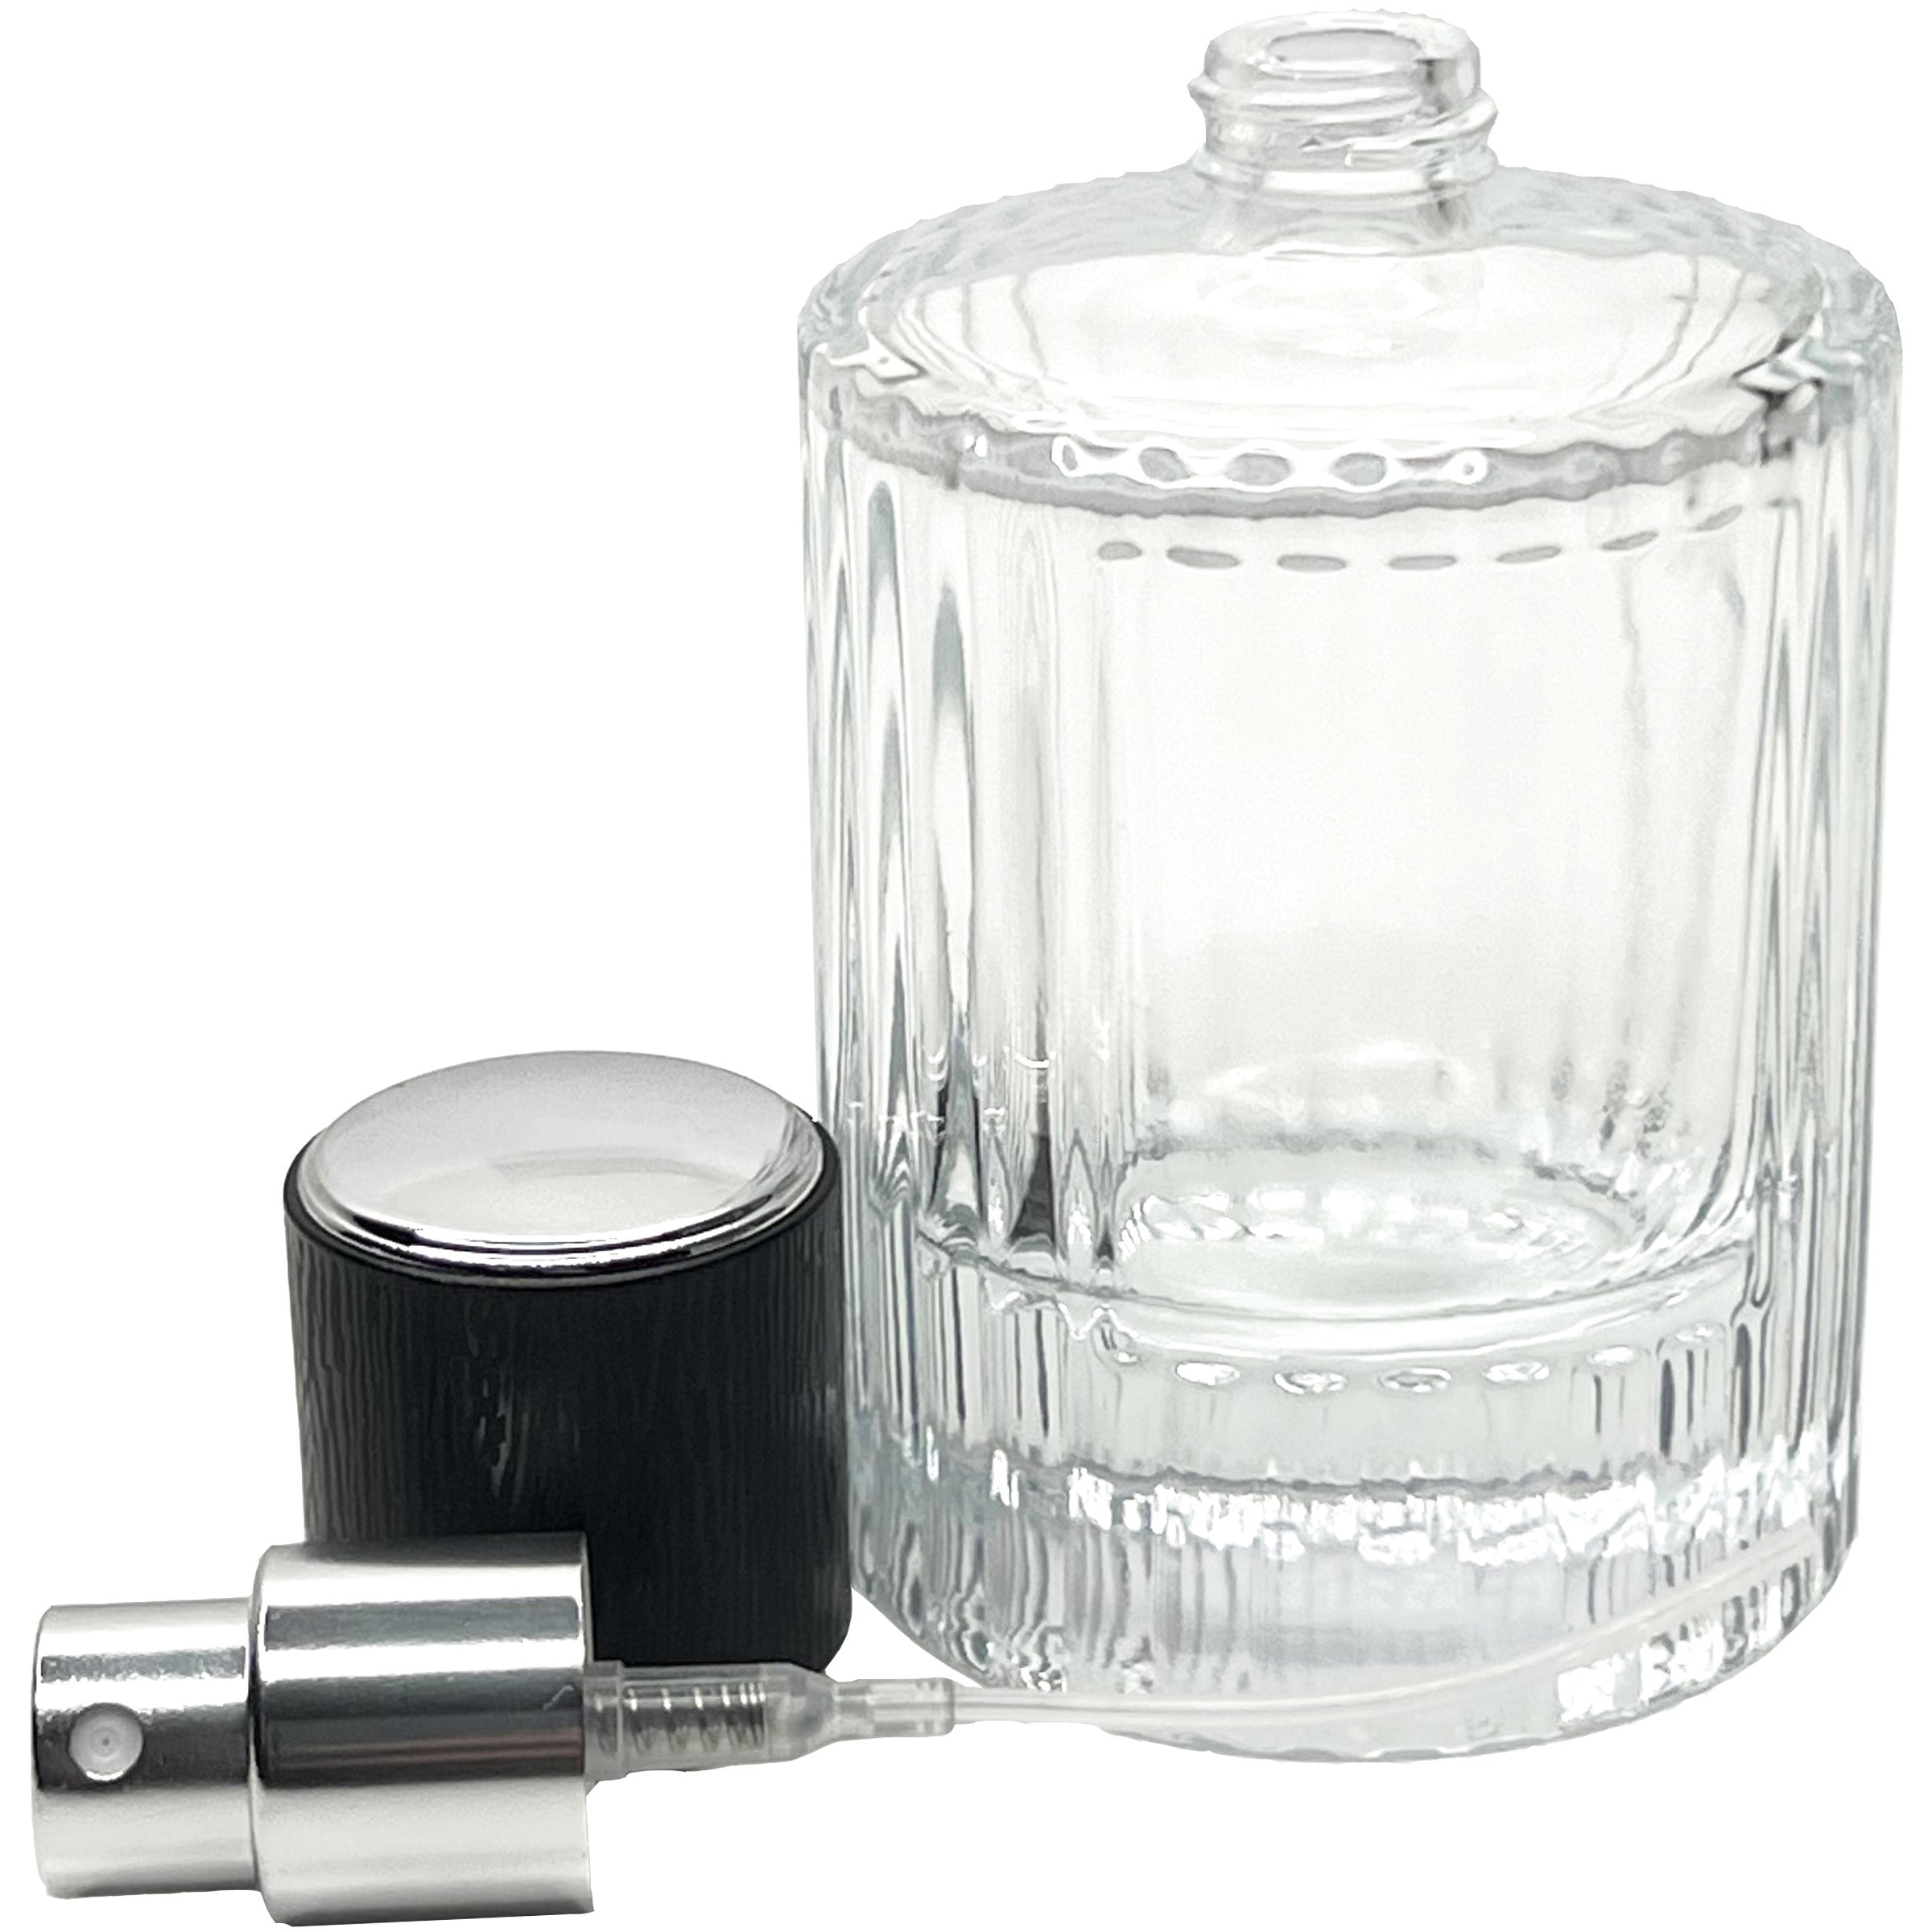 50ml 1.7oz Empty Refillable Thick Glass Perfume Deluxe Black Silver Cap Spray Bottles